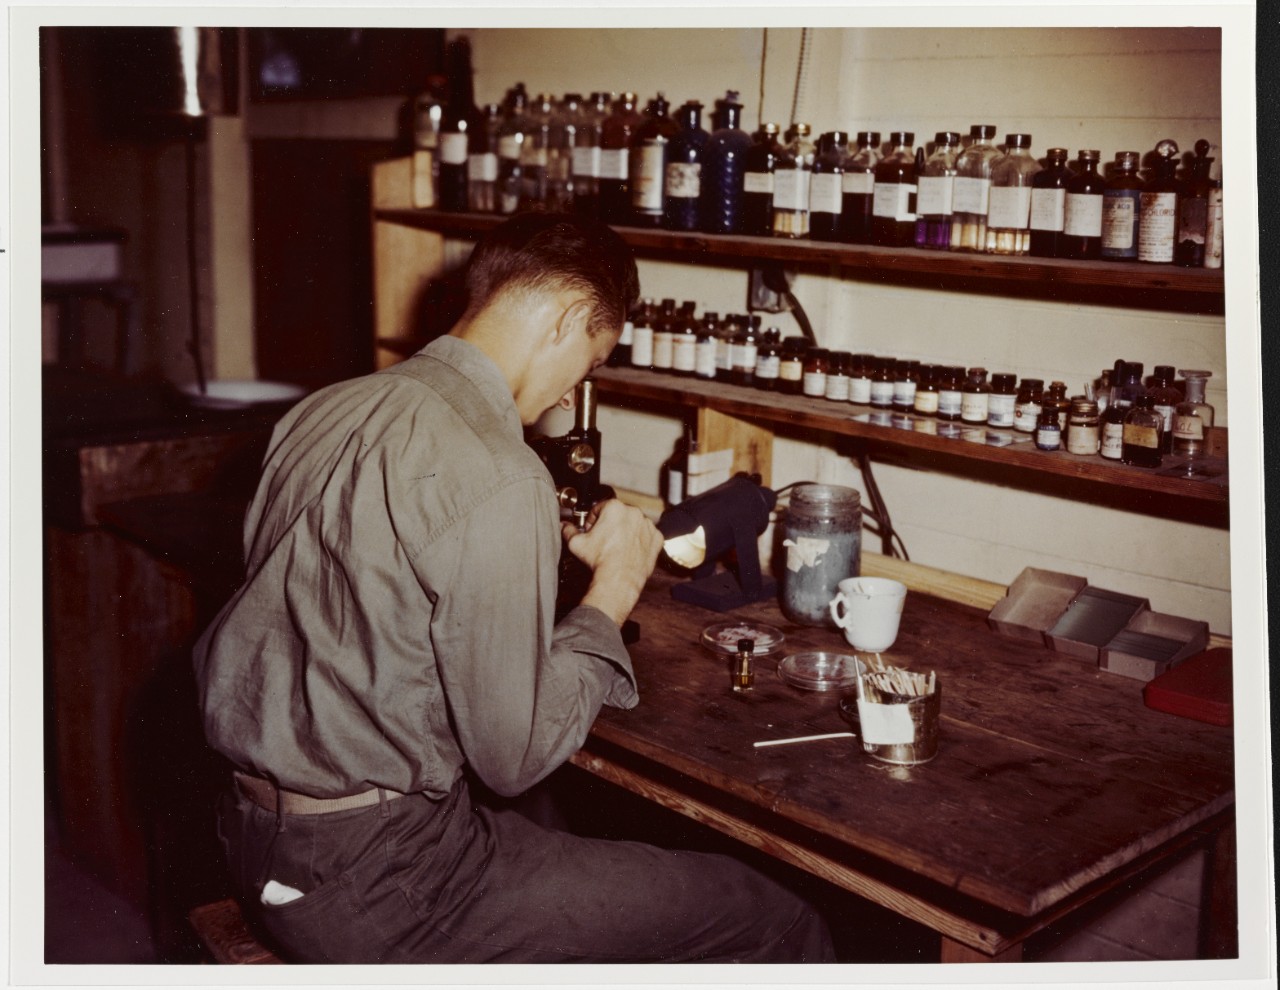 Agana, Guam, Civilian Hospital U.S. Navy Hospital Corpsman examines blood specimen, 1944-1945